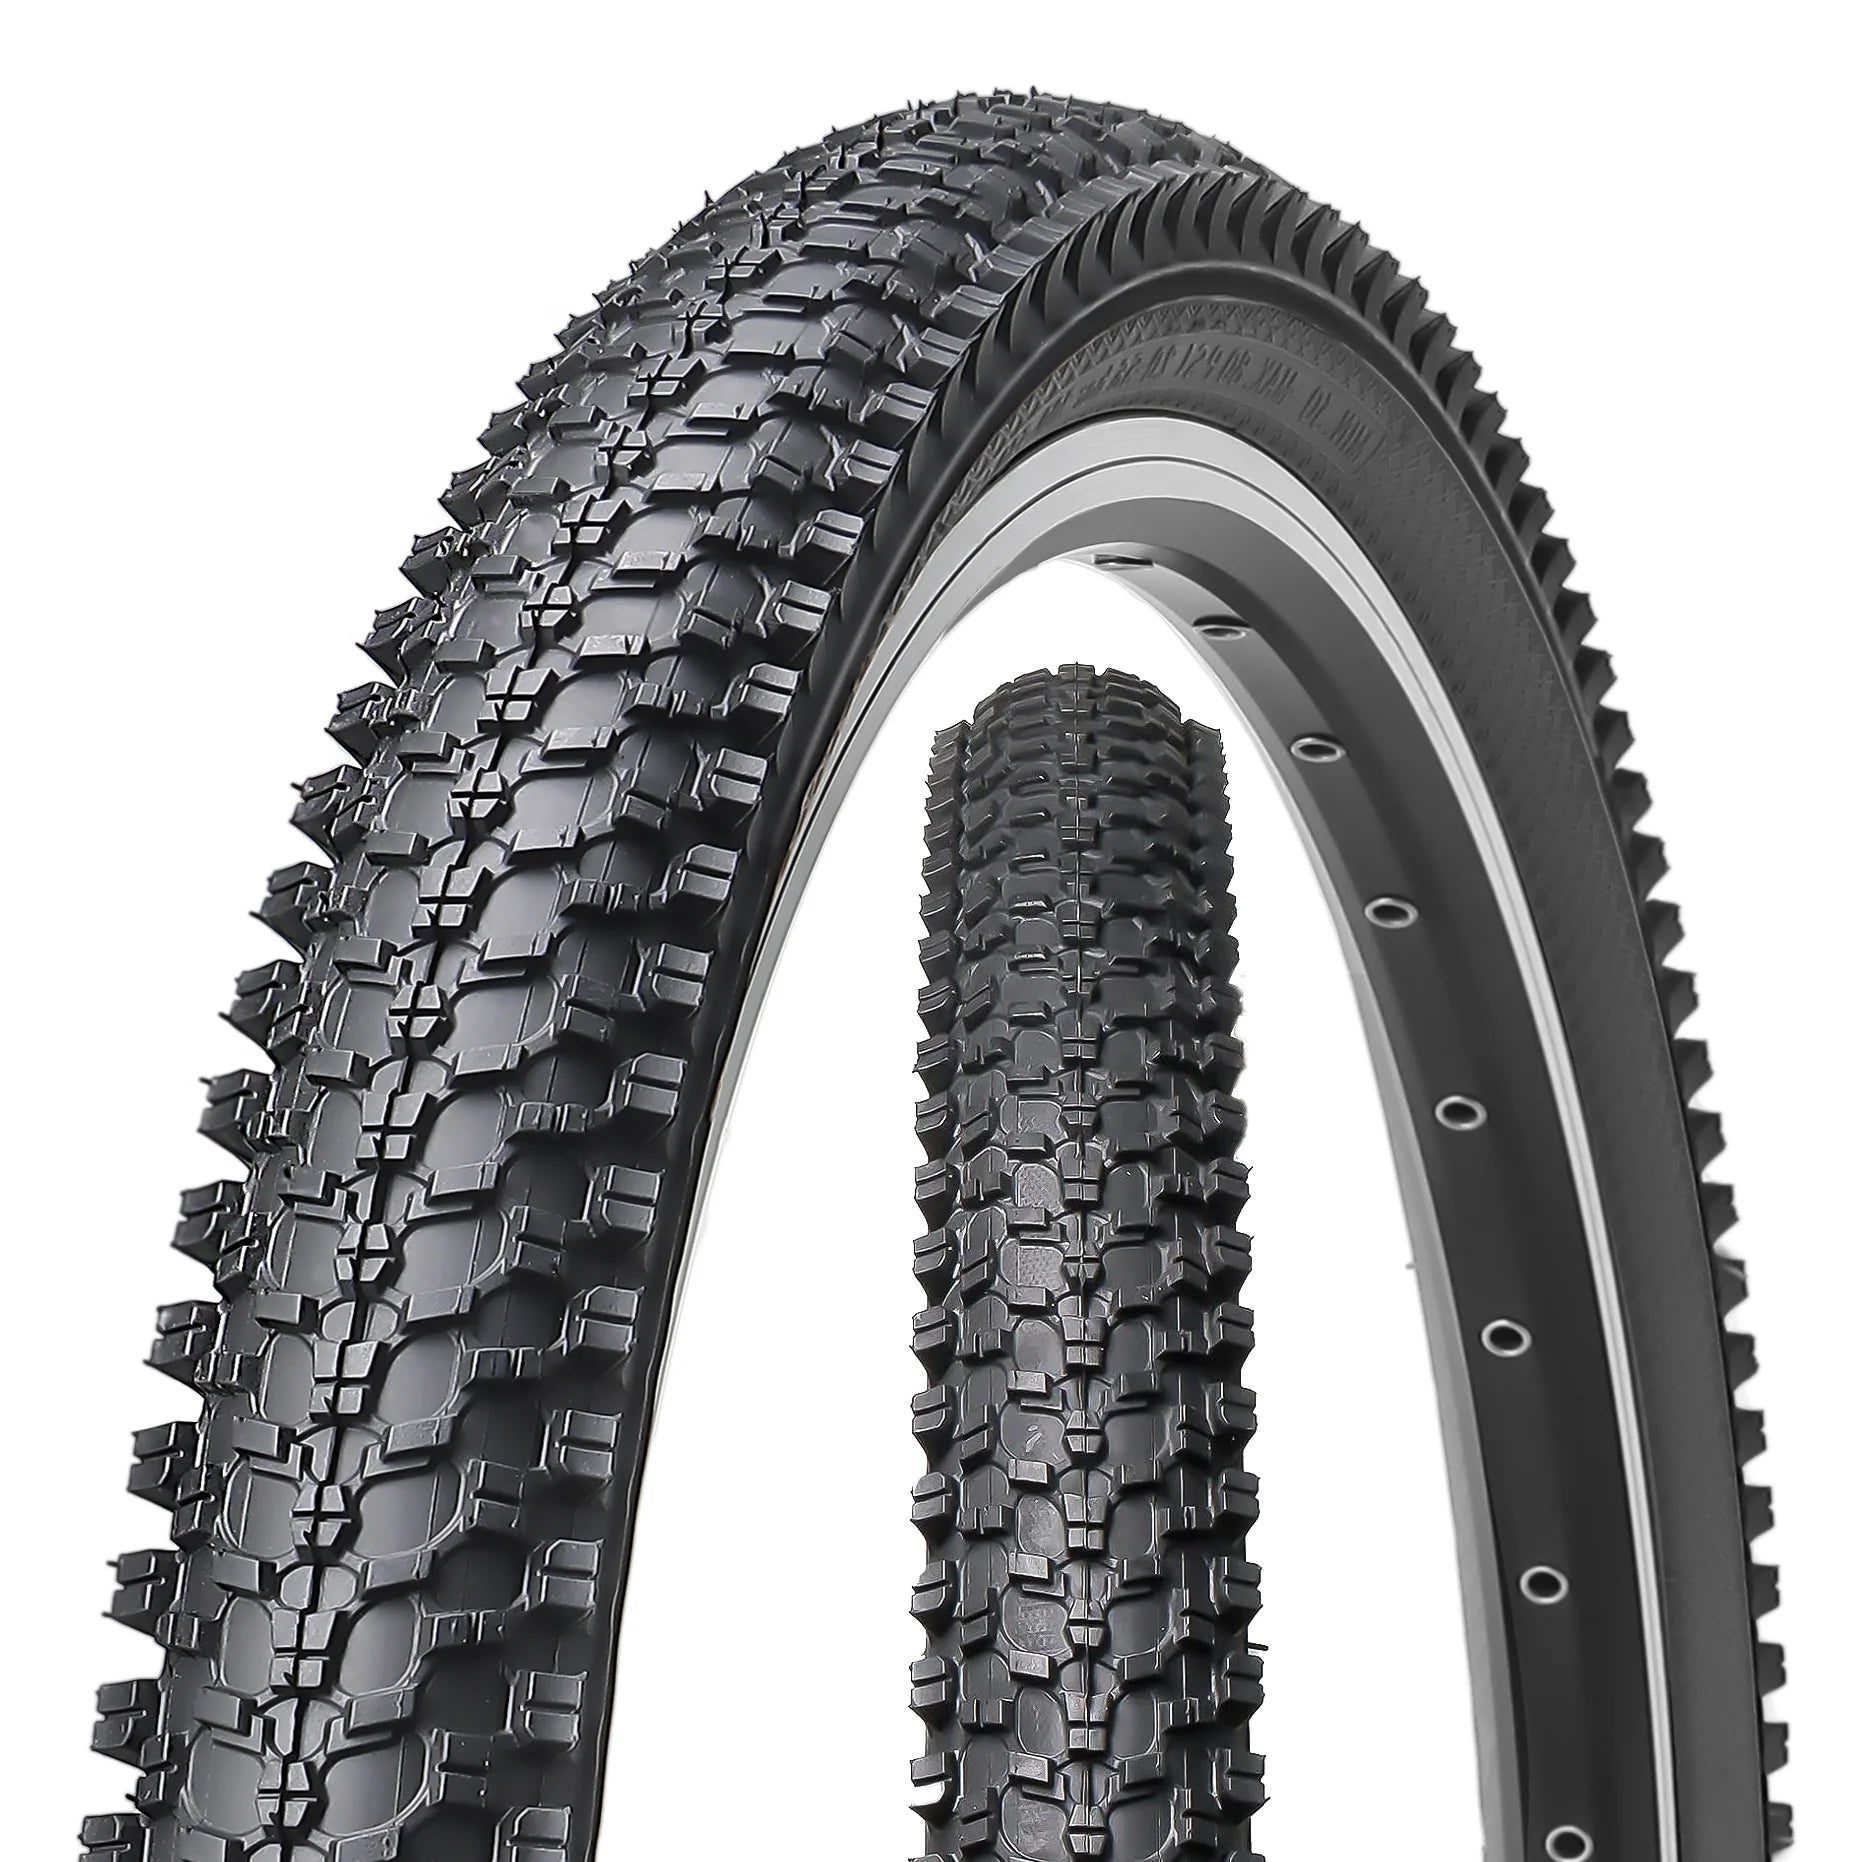 Studded Mountain Bike Tire - 24"×1.95” / 26"×1.95"